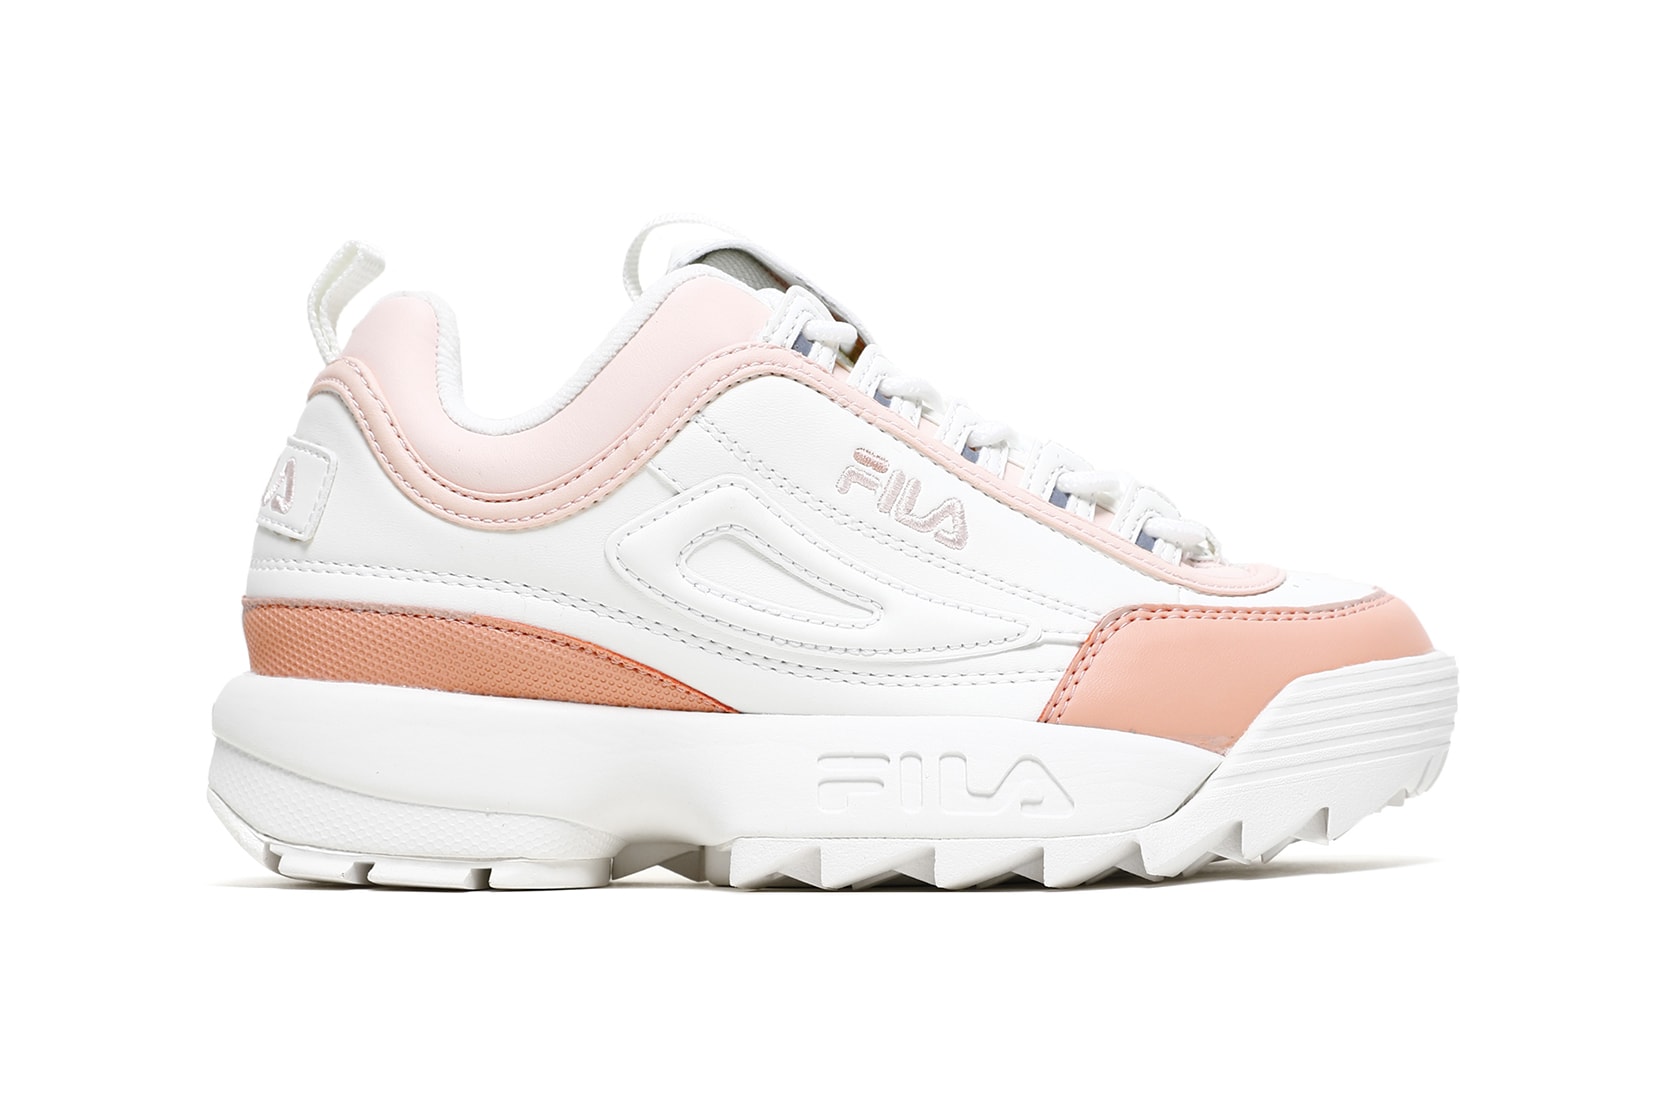 FILA Disruptor Low Blush Pink Salmon Marshmallow White Chunky Sneakers Trainers